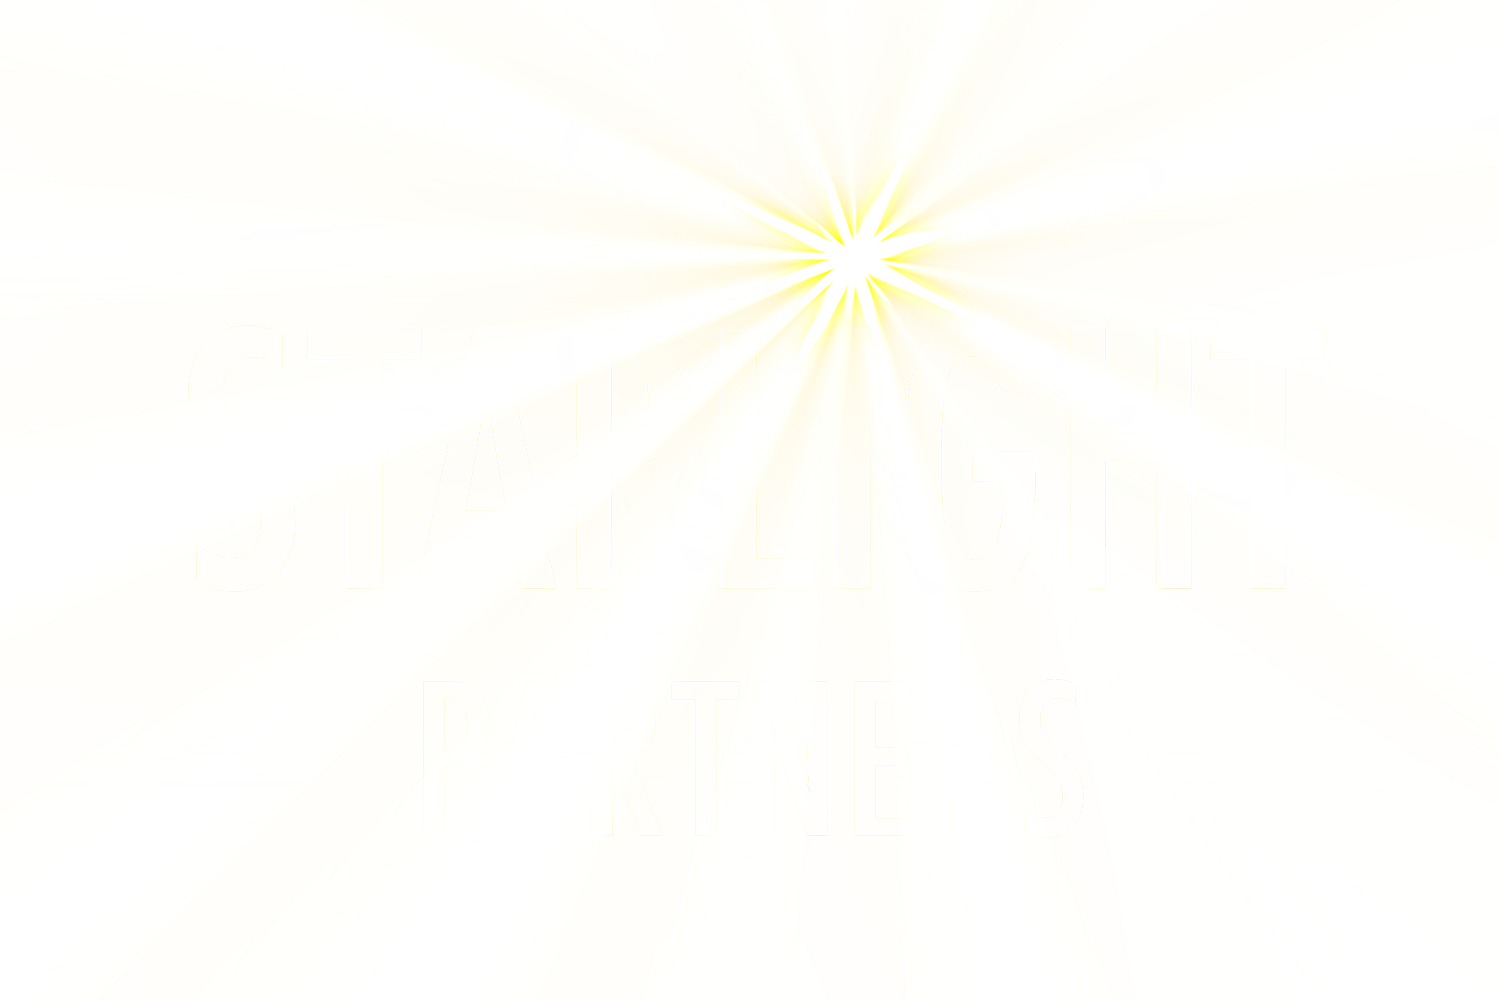 Starlight Partners